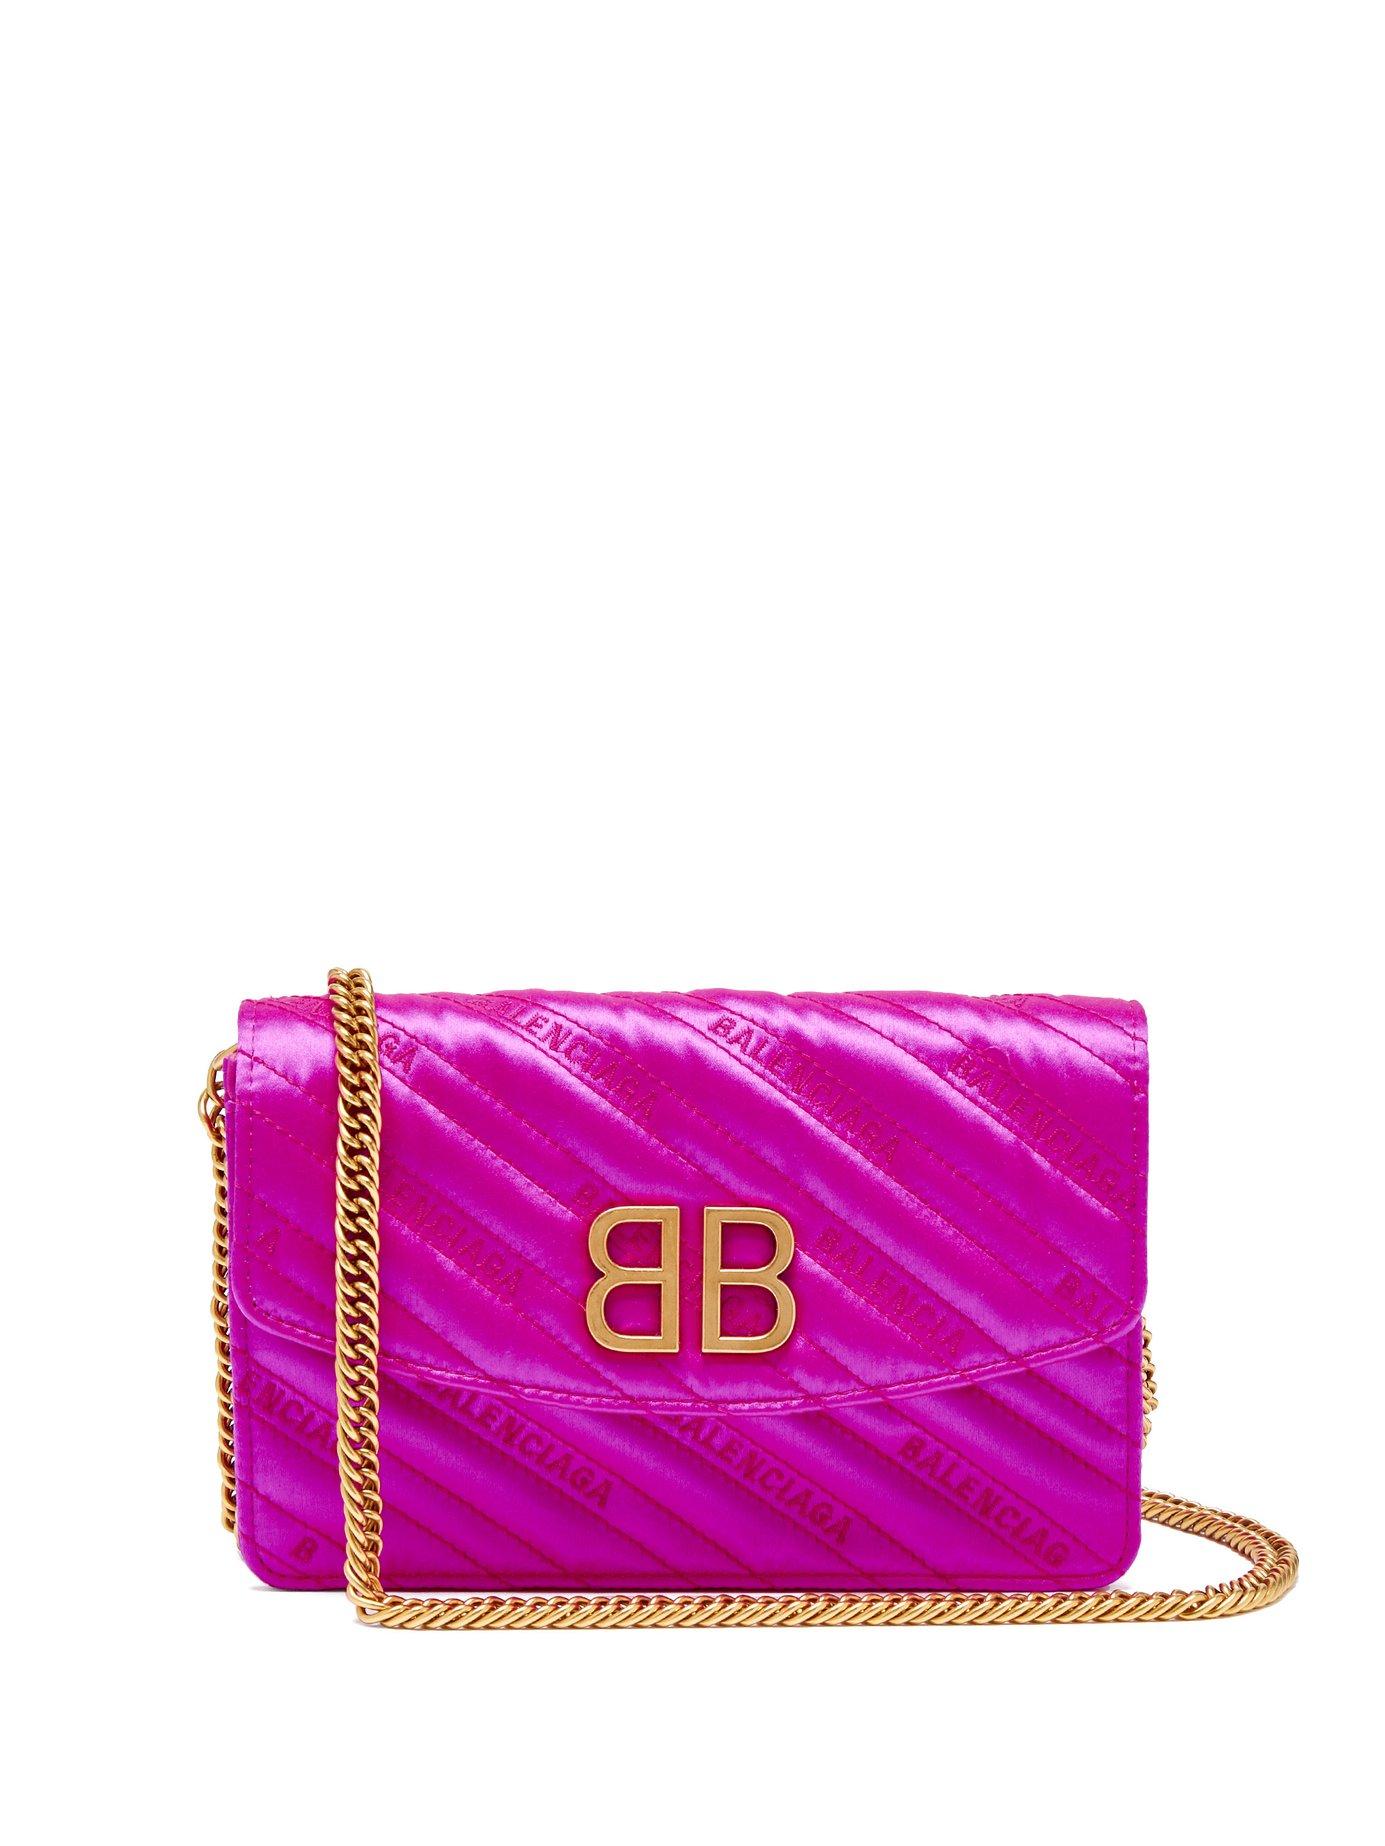 Lyst - Balenciaga Bb Logo Embroidered Satin Clutch Bag in Pink